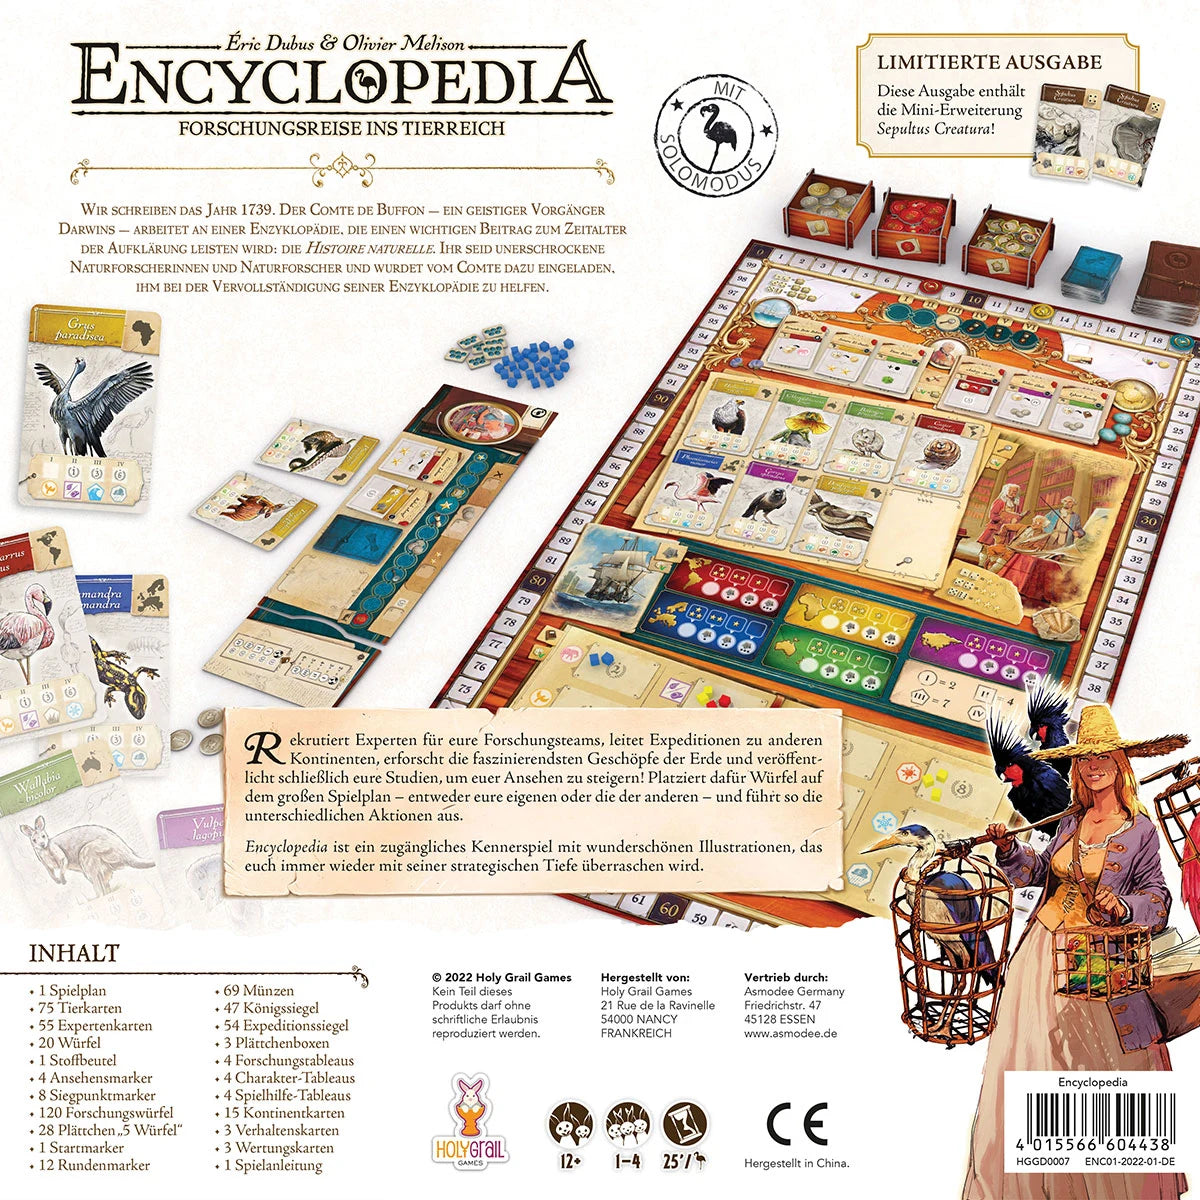 Encyclopedia: Research trip into the animal kingdom